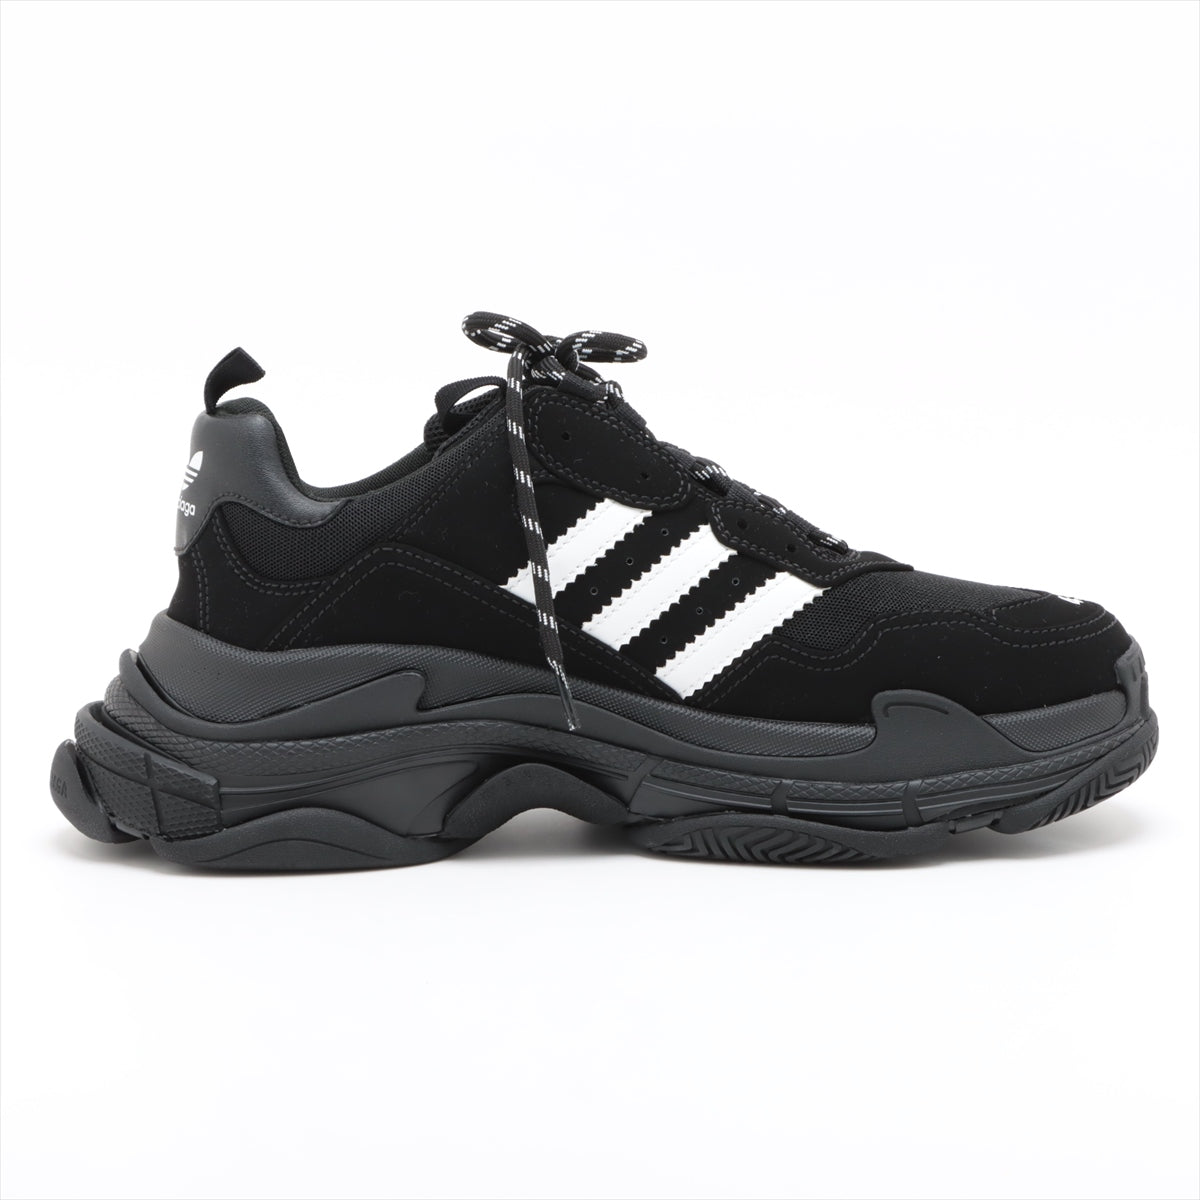 Balenciaga X Adidas Triple S Mesh X Leather Sneakers 45 Men Black X White 712821